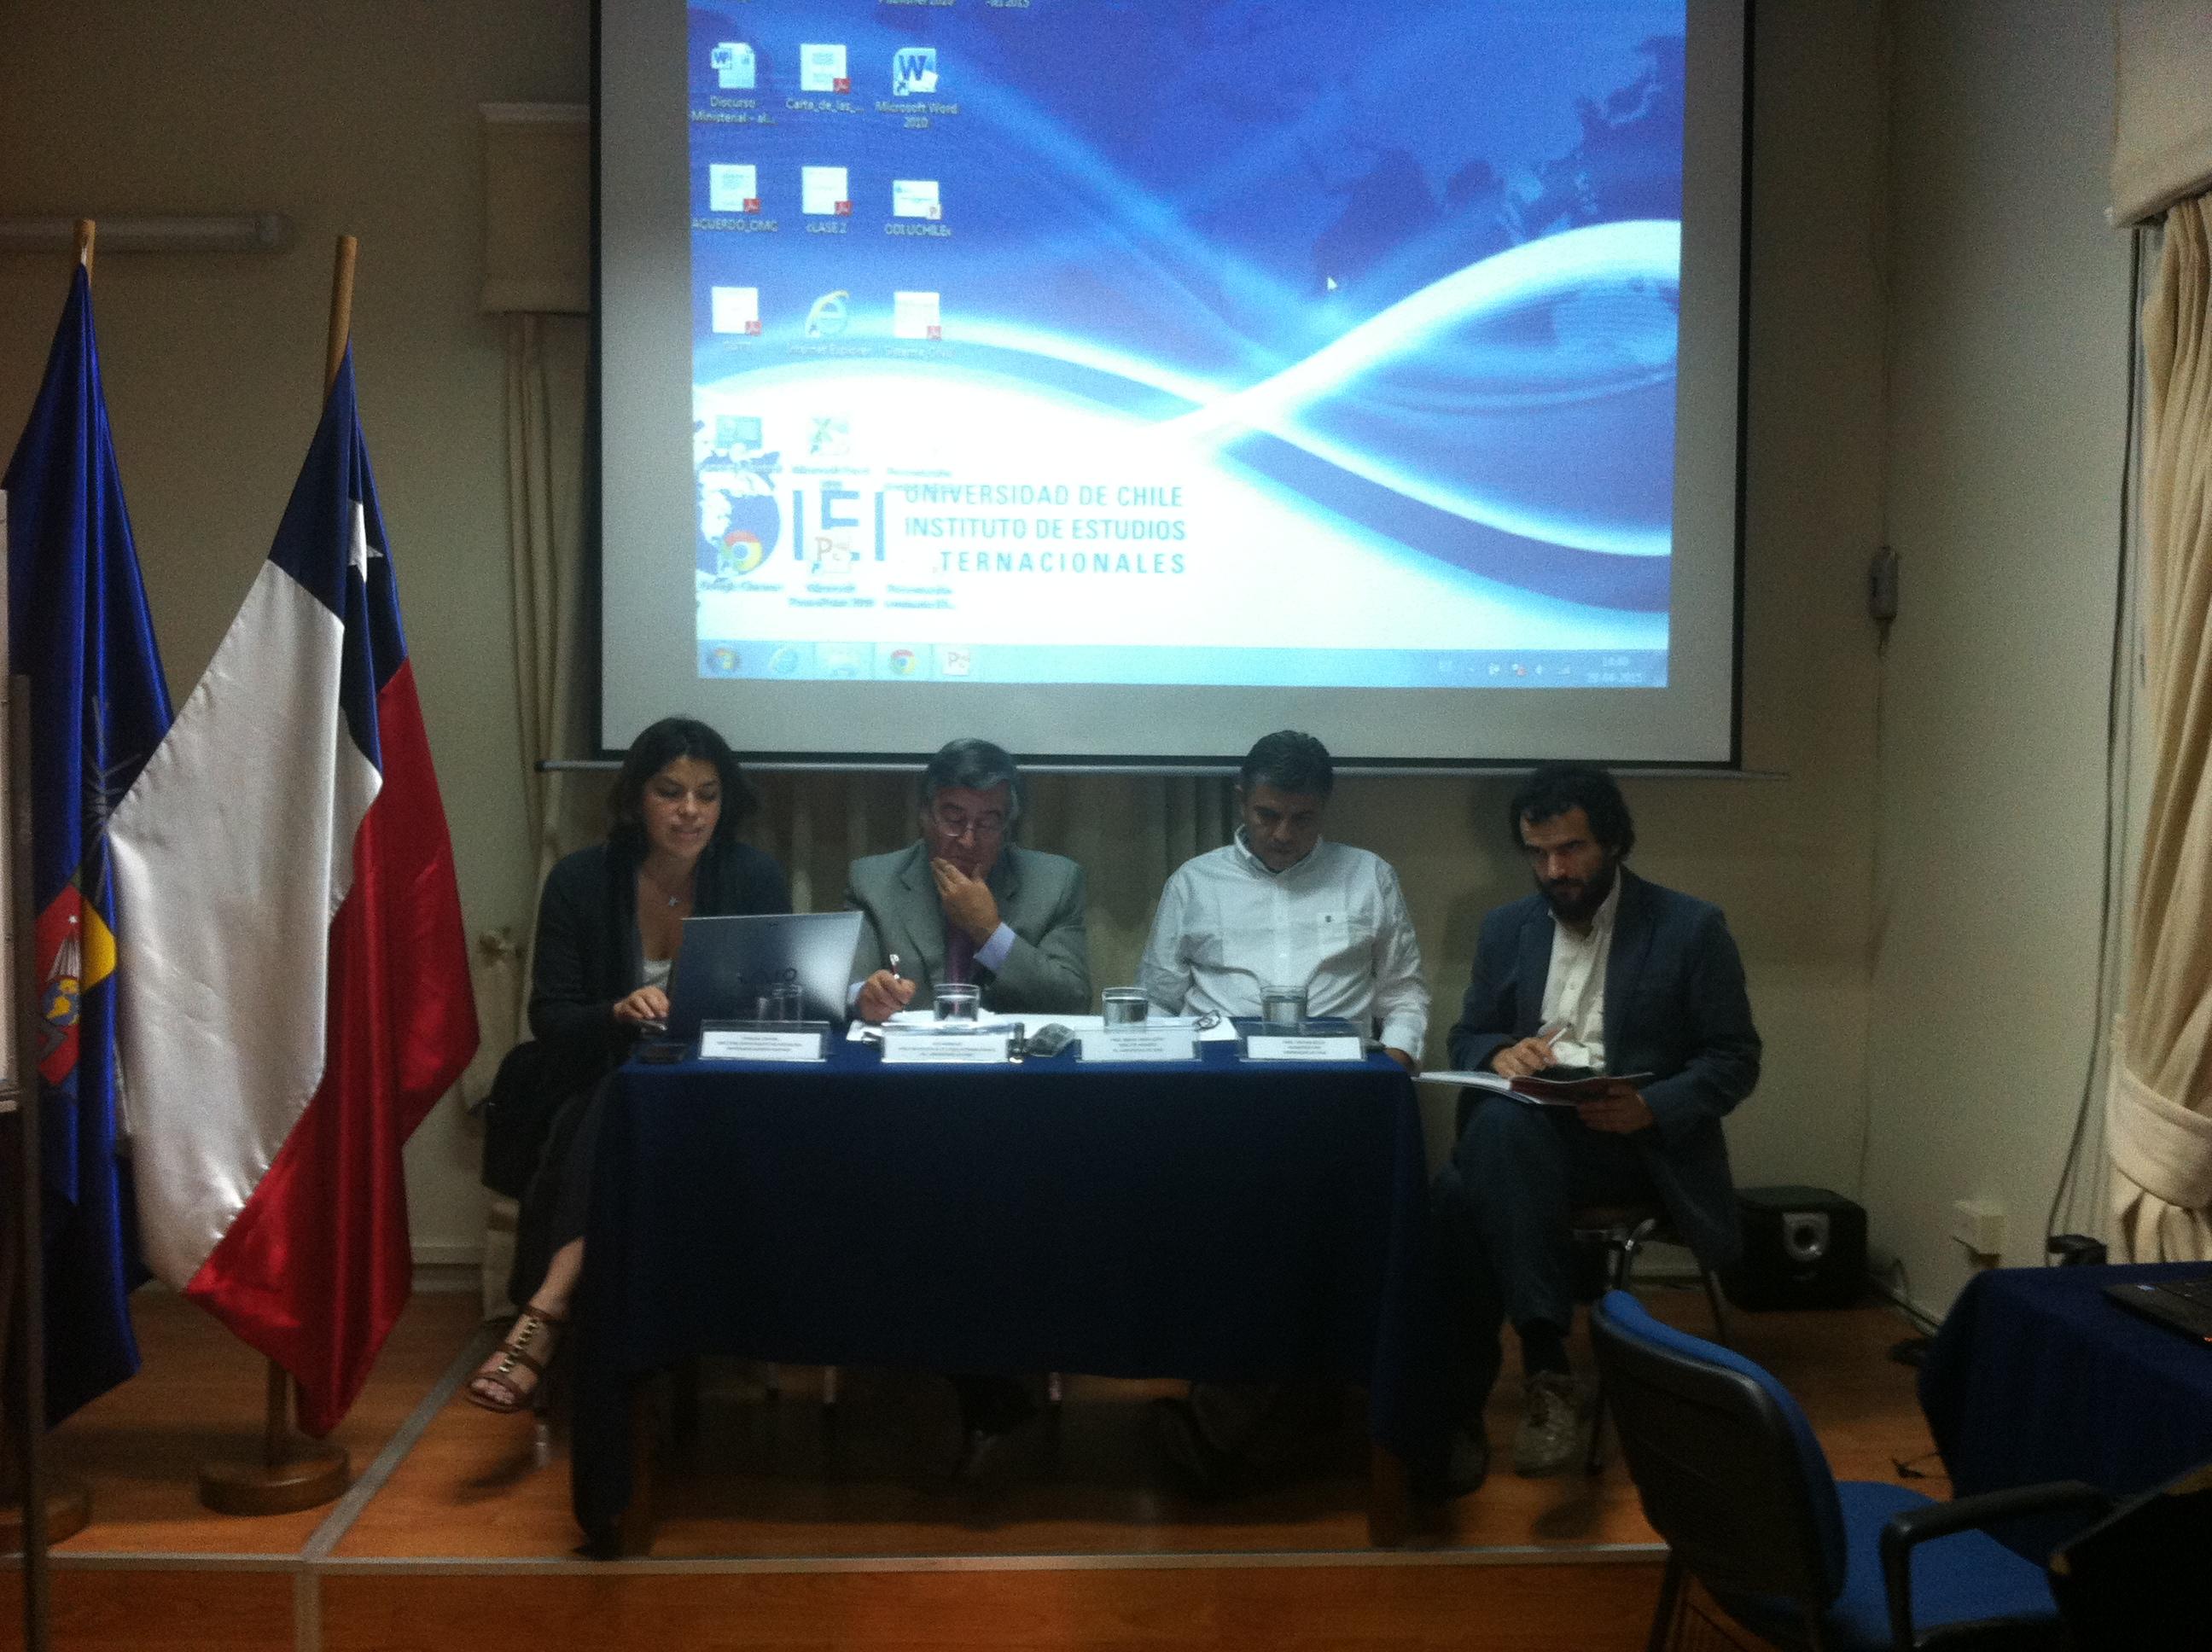 De izquierda a derecha: Carolina Stefoni, Prof. José Morandé, Prof. Miguel Ángel López, Cristian Bellei.